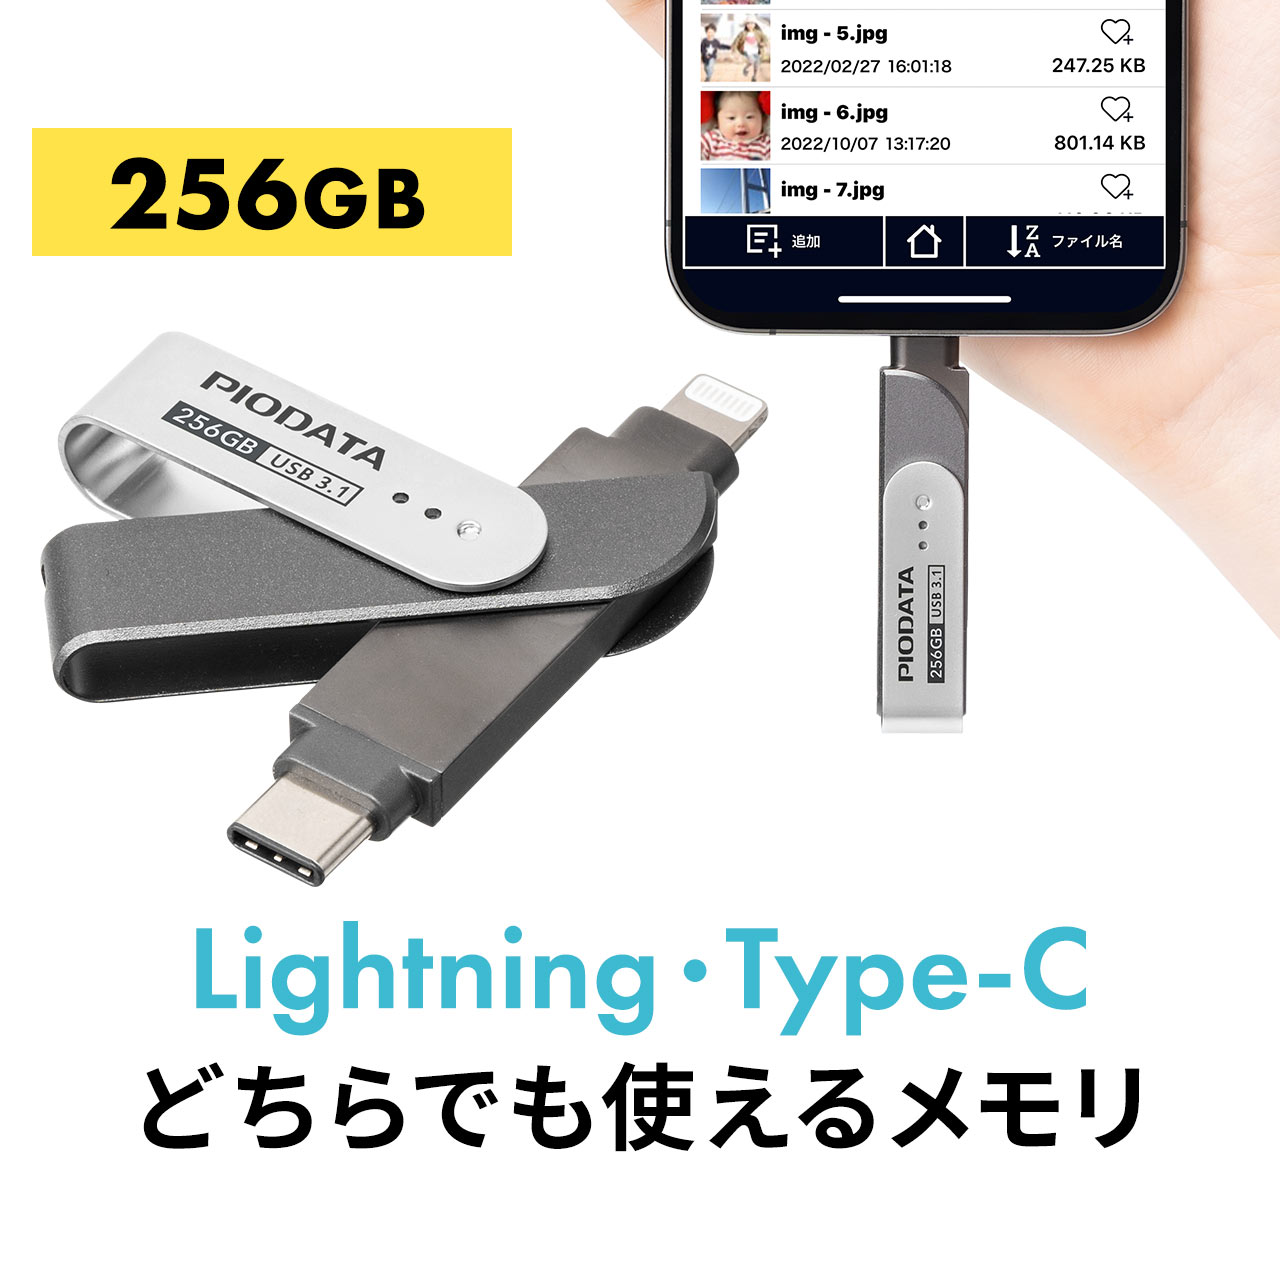 iPhone iPad USB lightning-Type-C LightningΉ iPhone iPad MFiF XCO 256GB